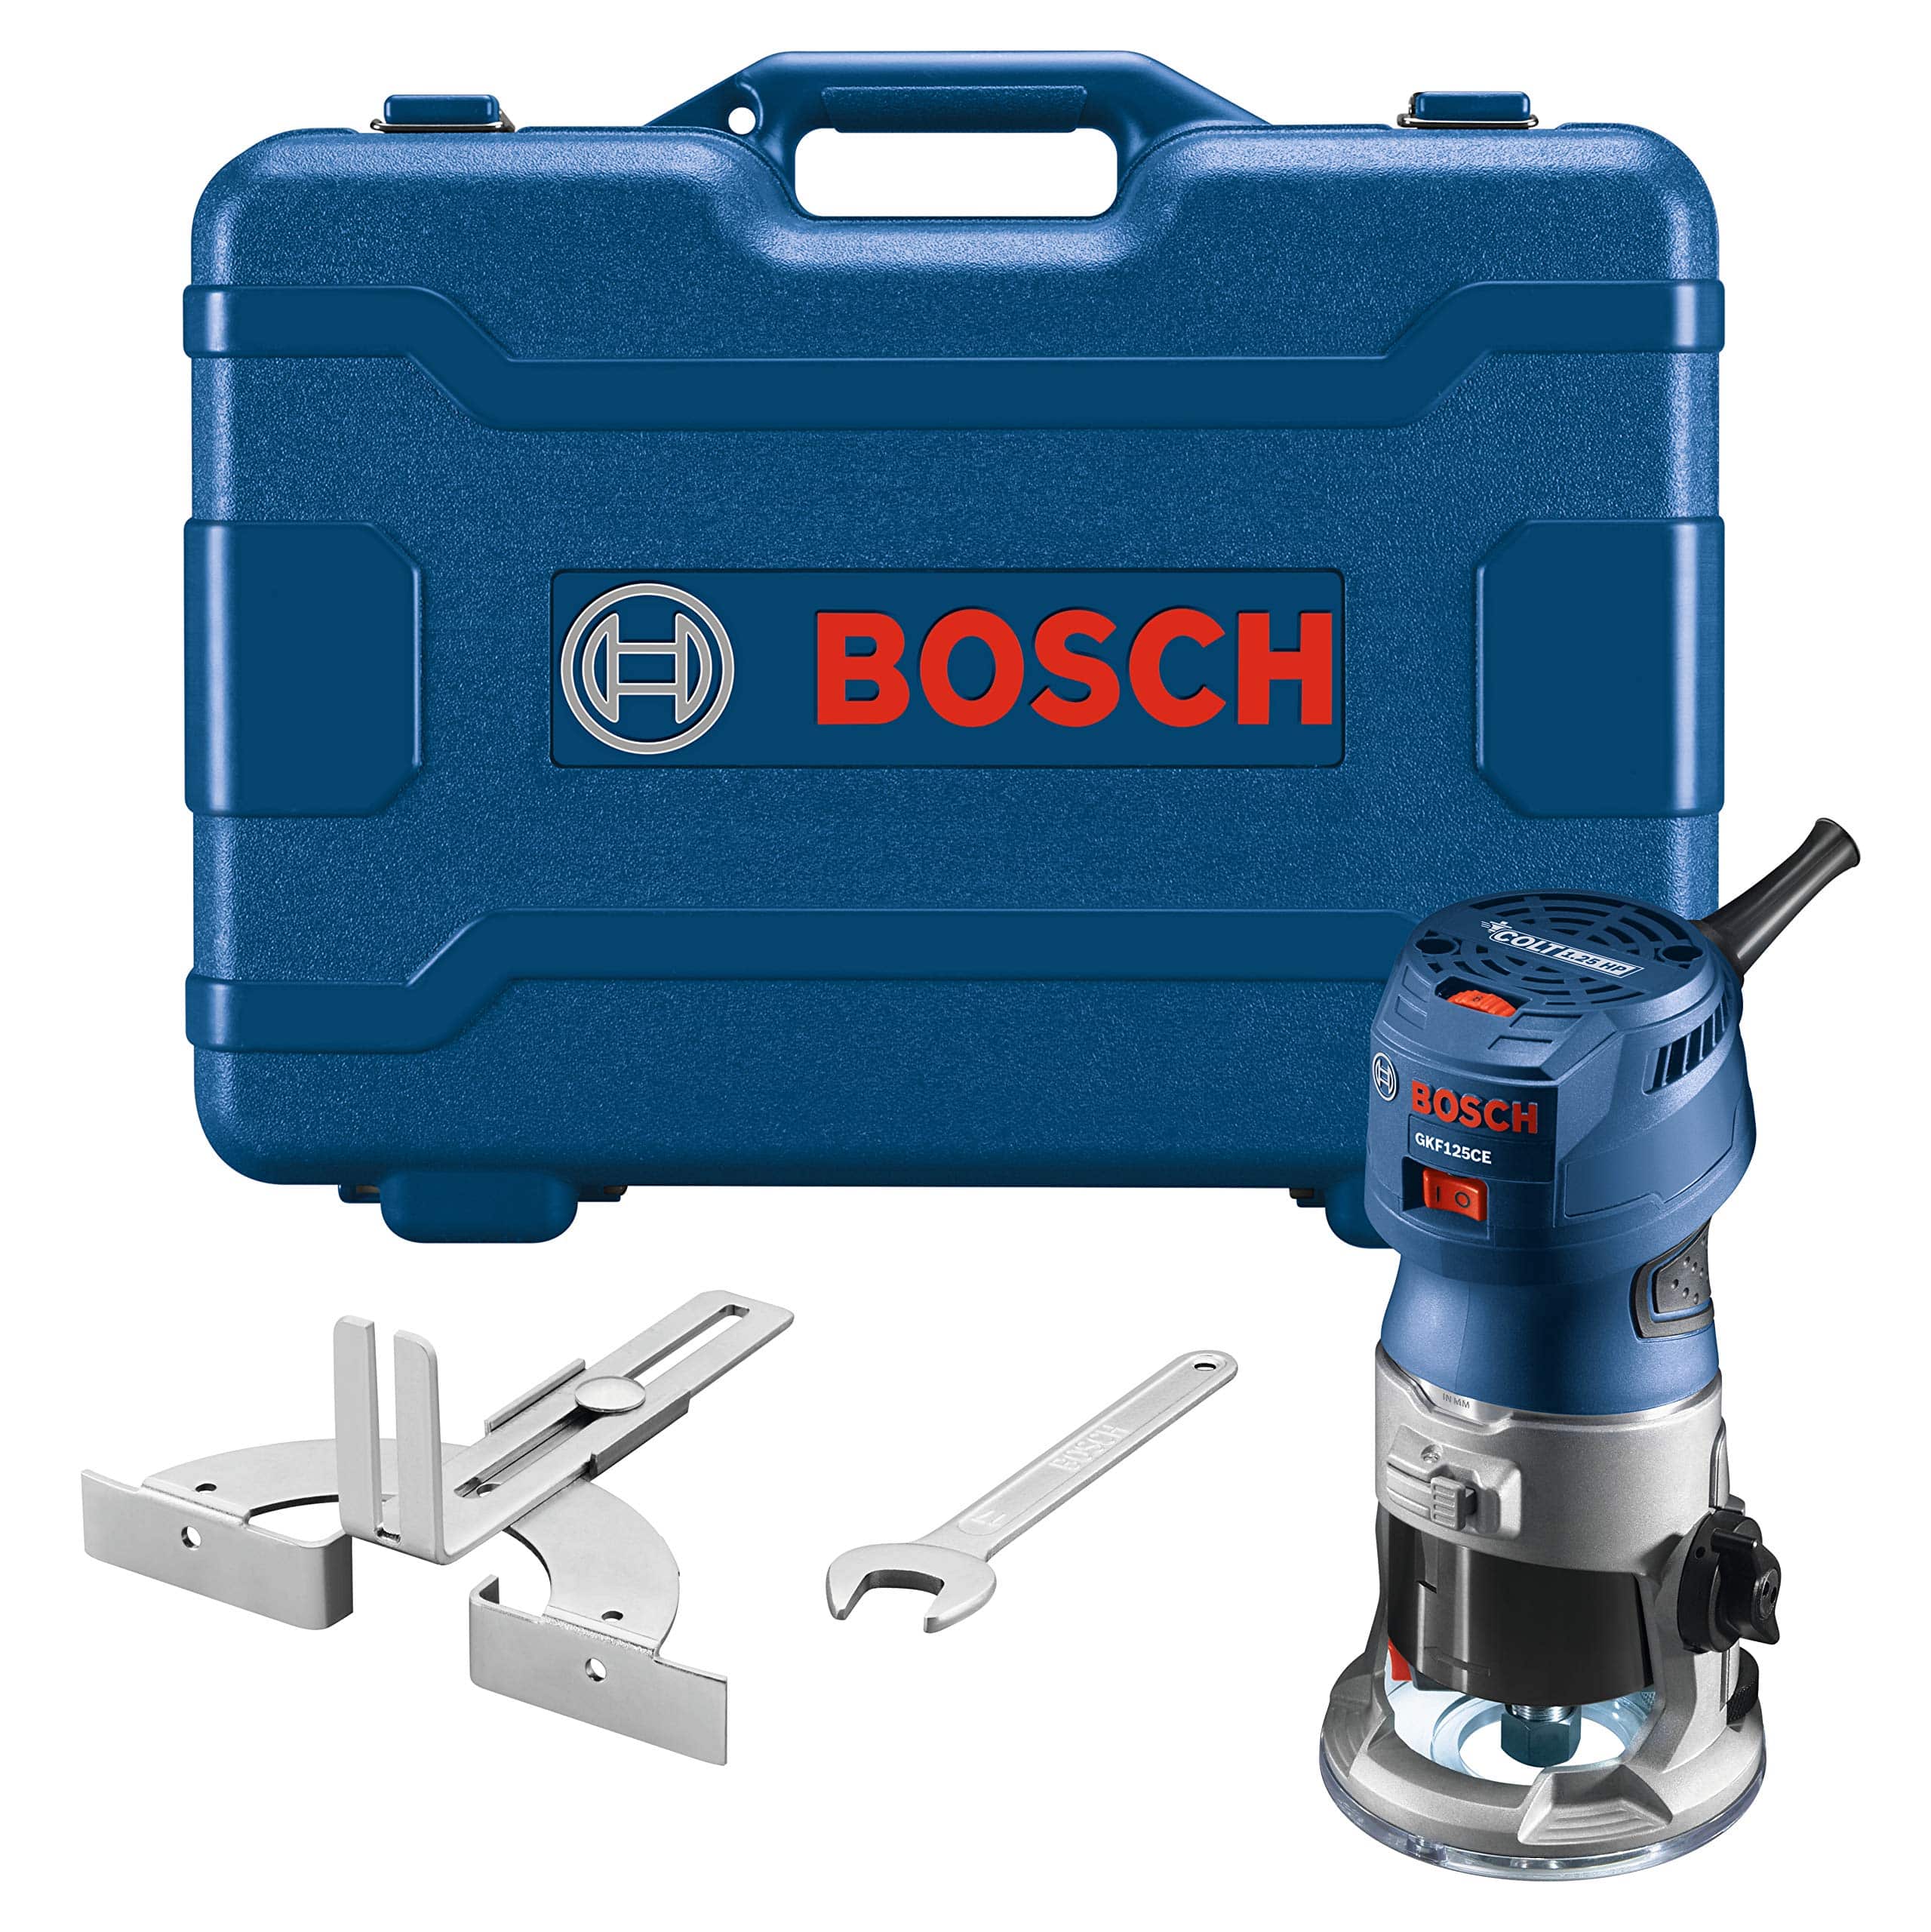 Bosch Colt 1.25 HP Palm Router Kit